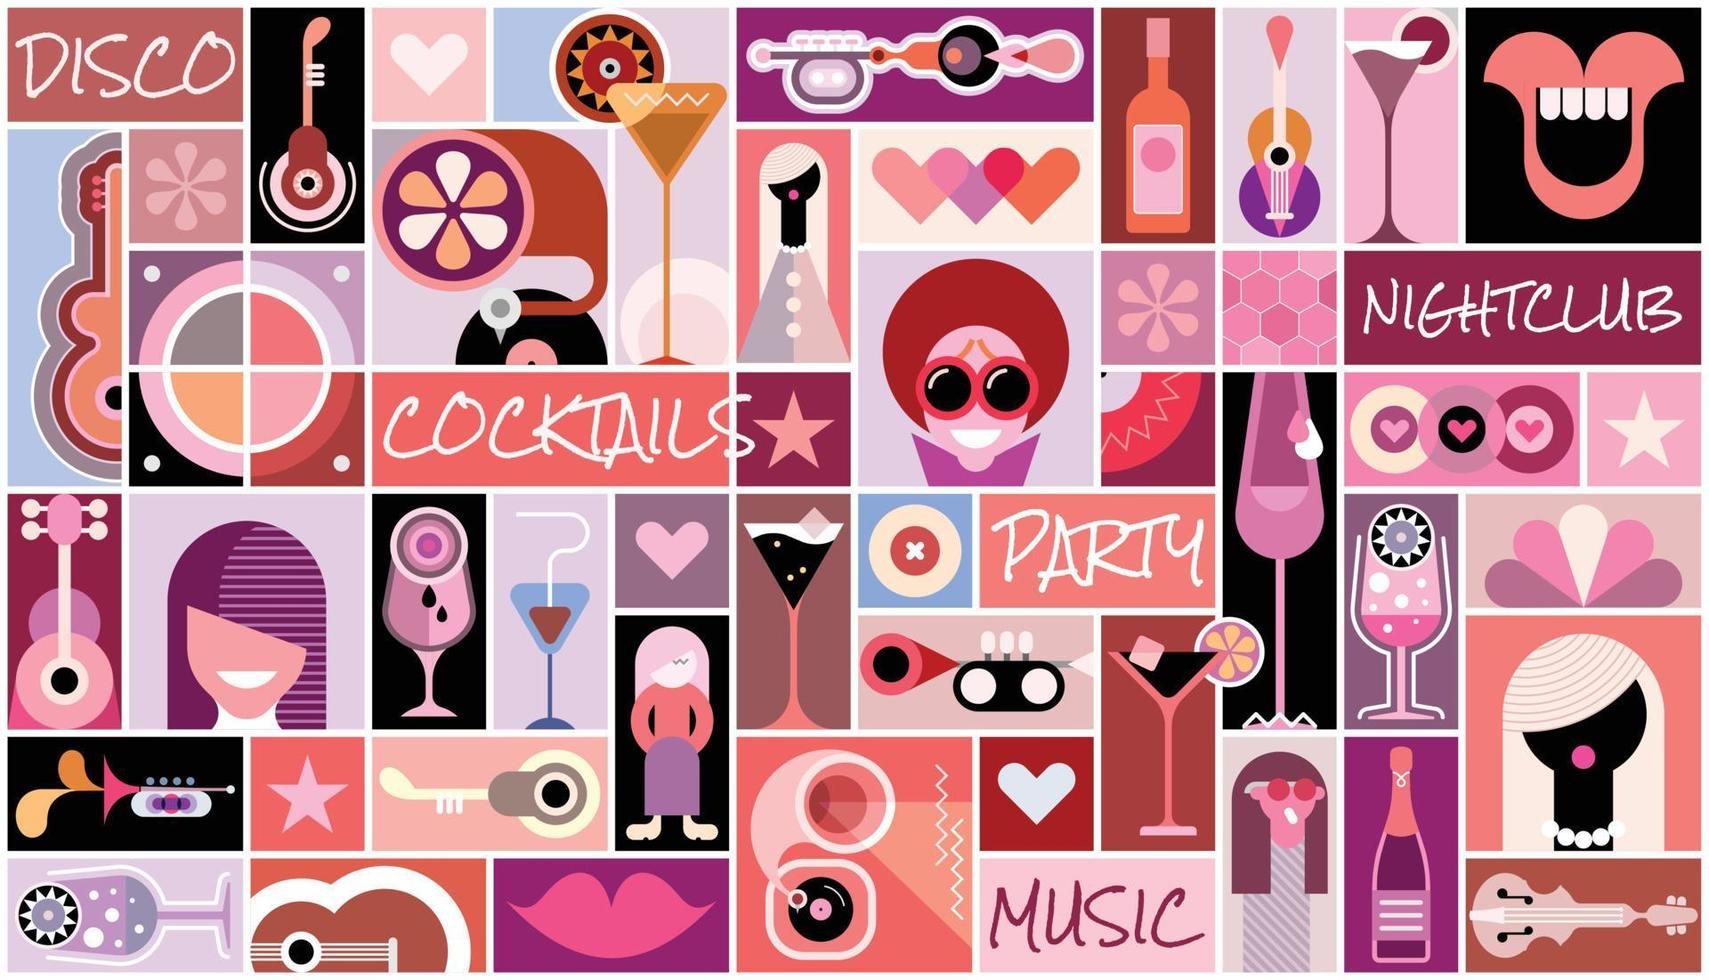 Disco Party pop art collage vector